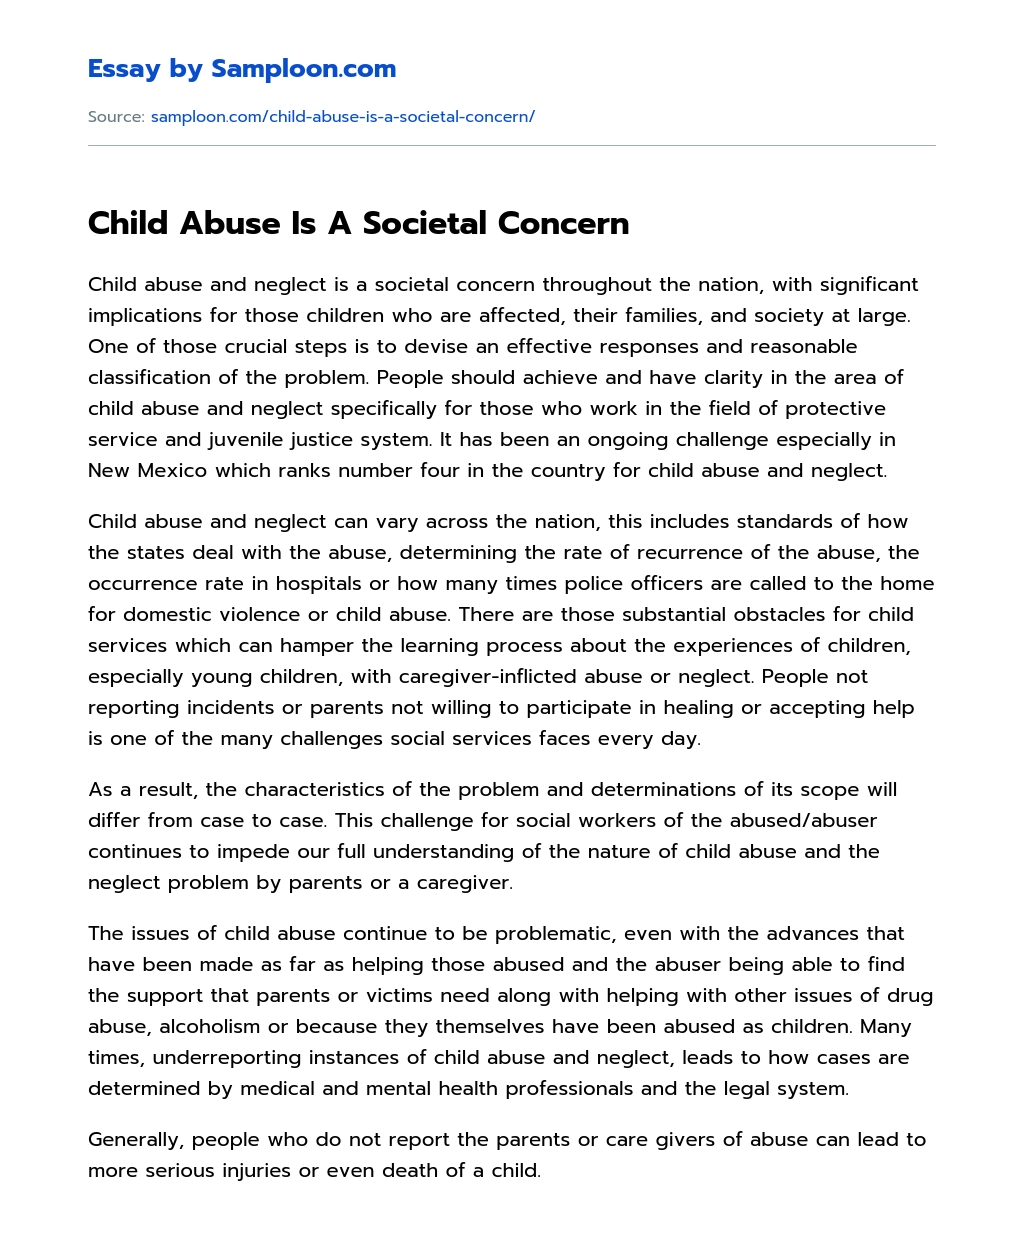 Child Abuse Is A Societal Concern essay